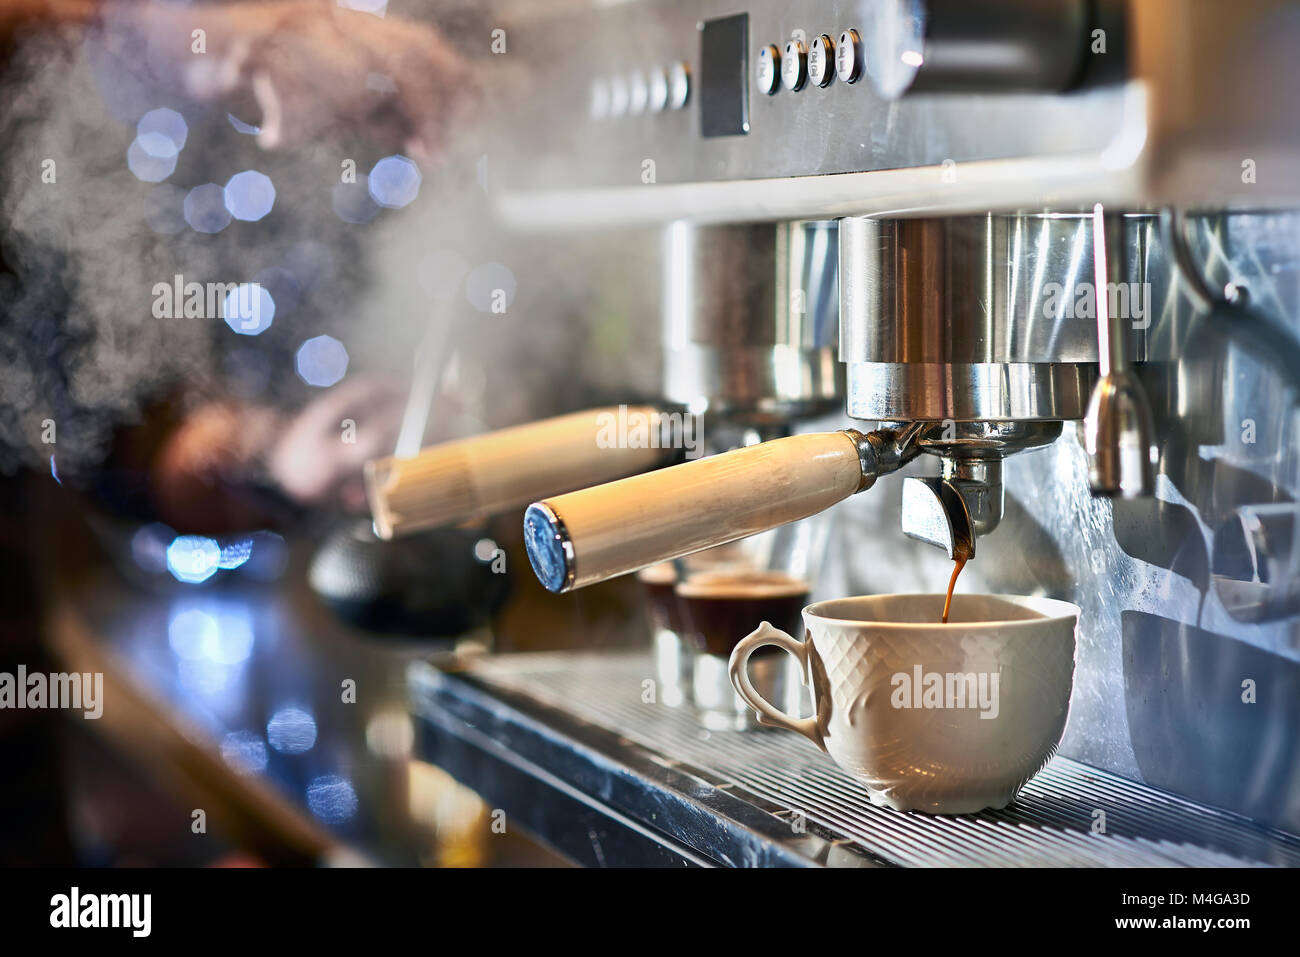 https://c8.alamy.com/comp/M4GA3D/barista-making-a-espresso-with-a-classic-italian-coffee-machine-with-M4GA3D.jpg